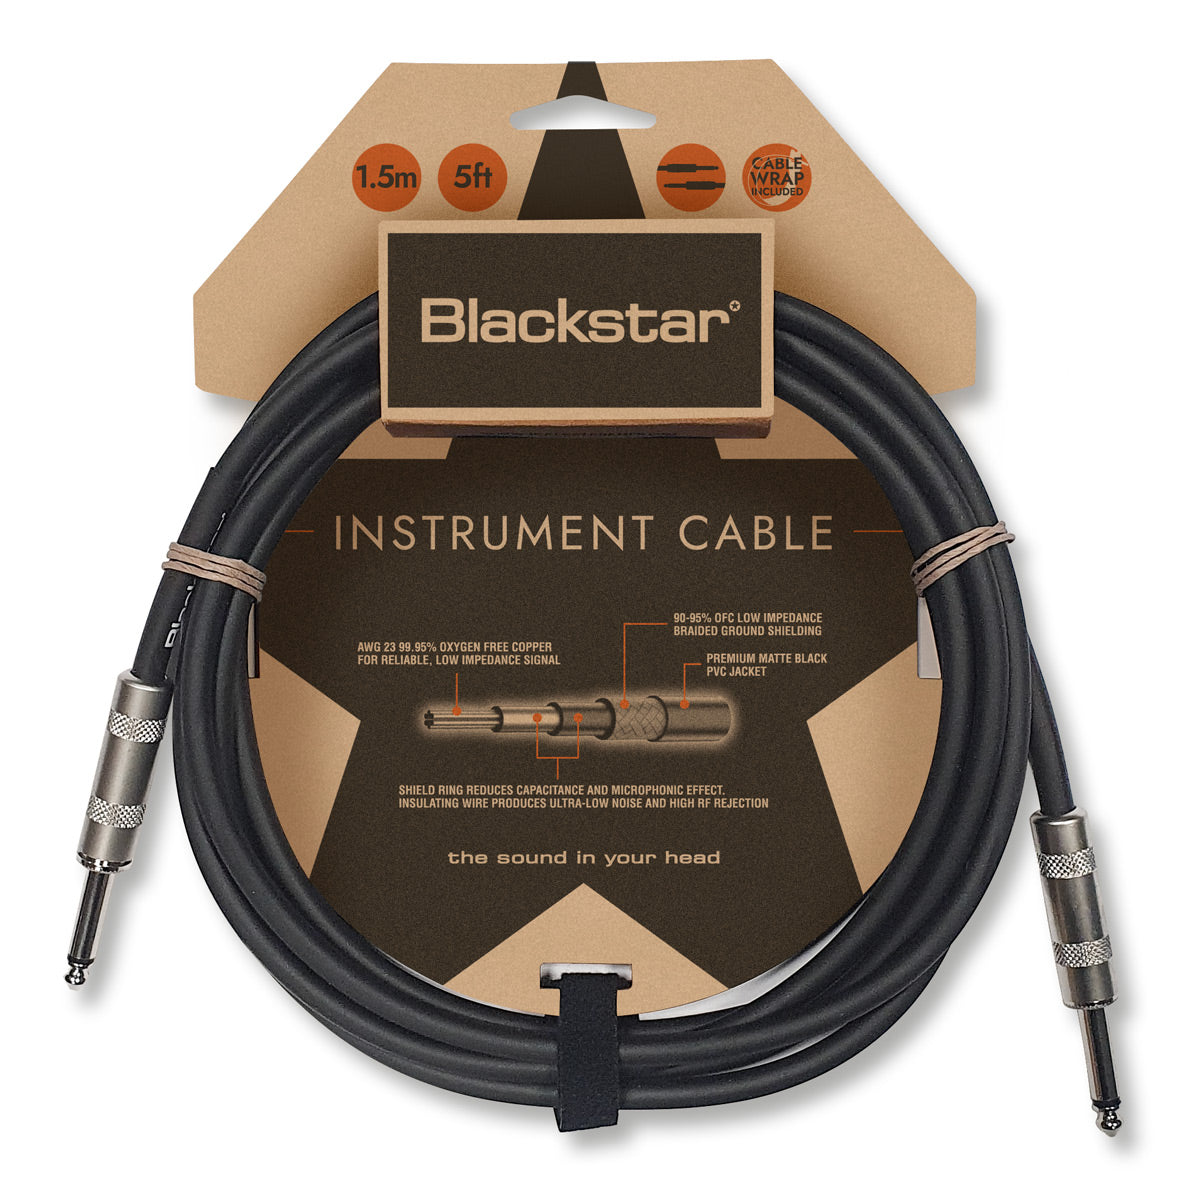 Blackstar instrument cable